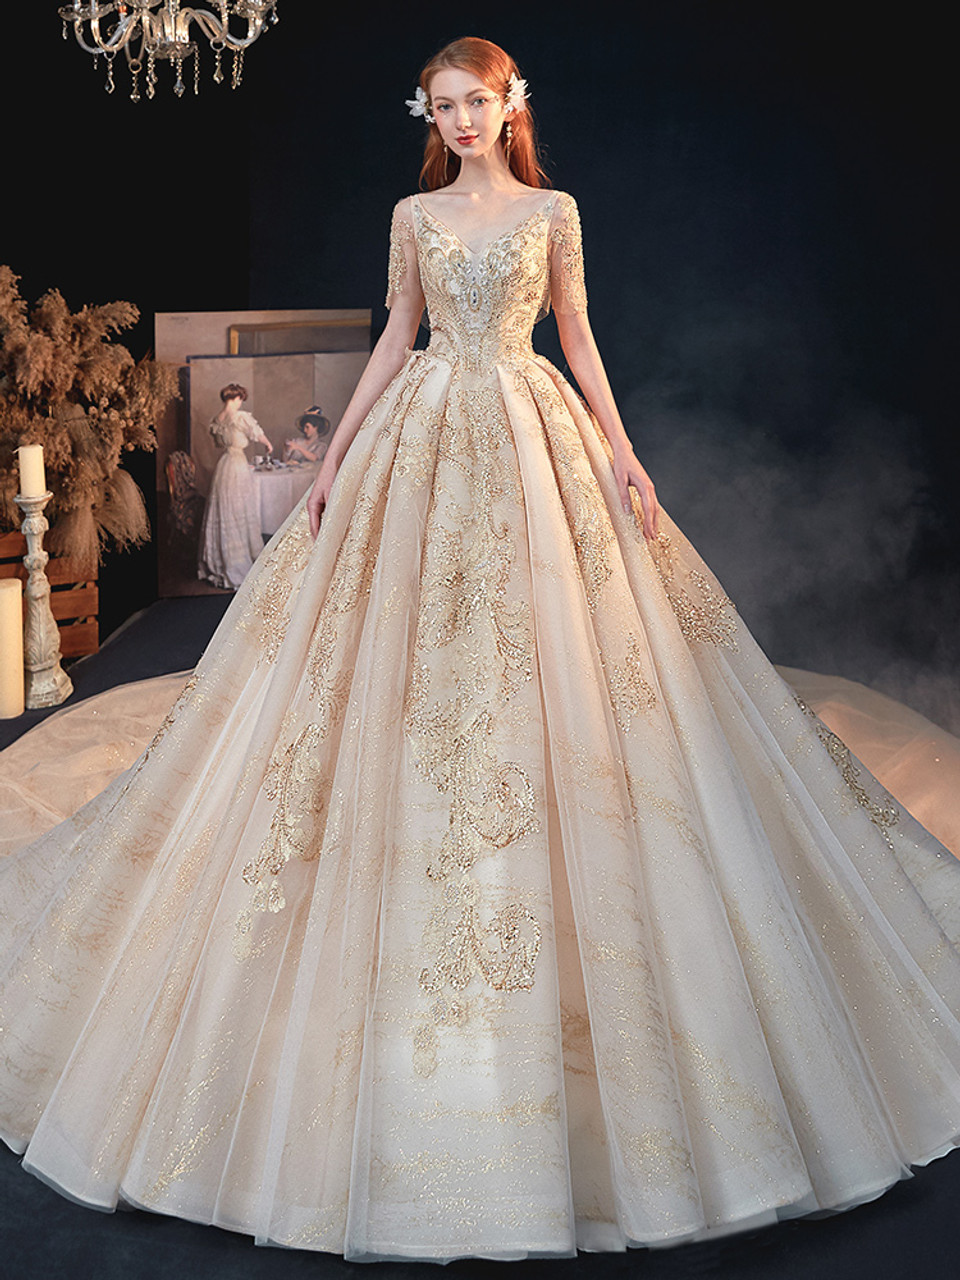 Le Fashion: 45 Stunning Wedding Dresses Under $500 For The Modern Bride